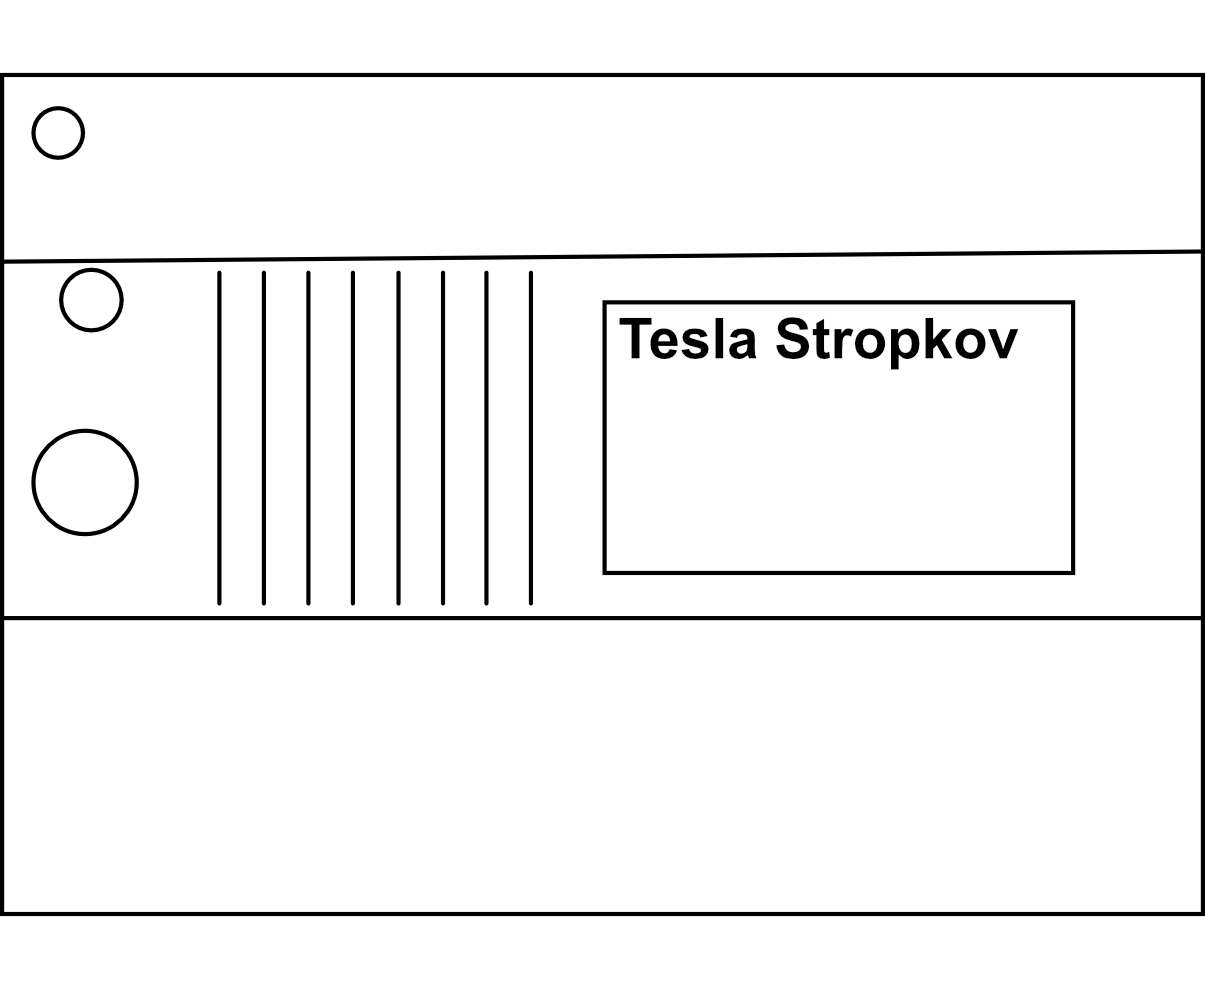 Síťový zdroj pro 2-BUS Tesla Stropkov 4FP 672 49 